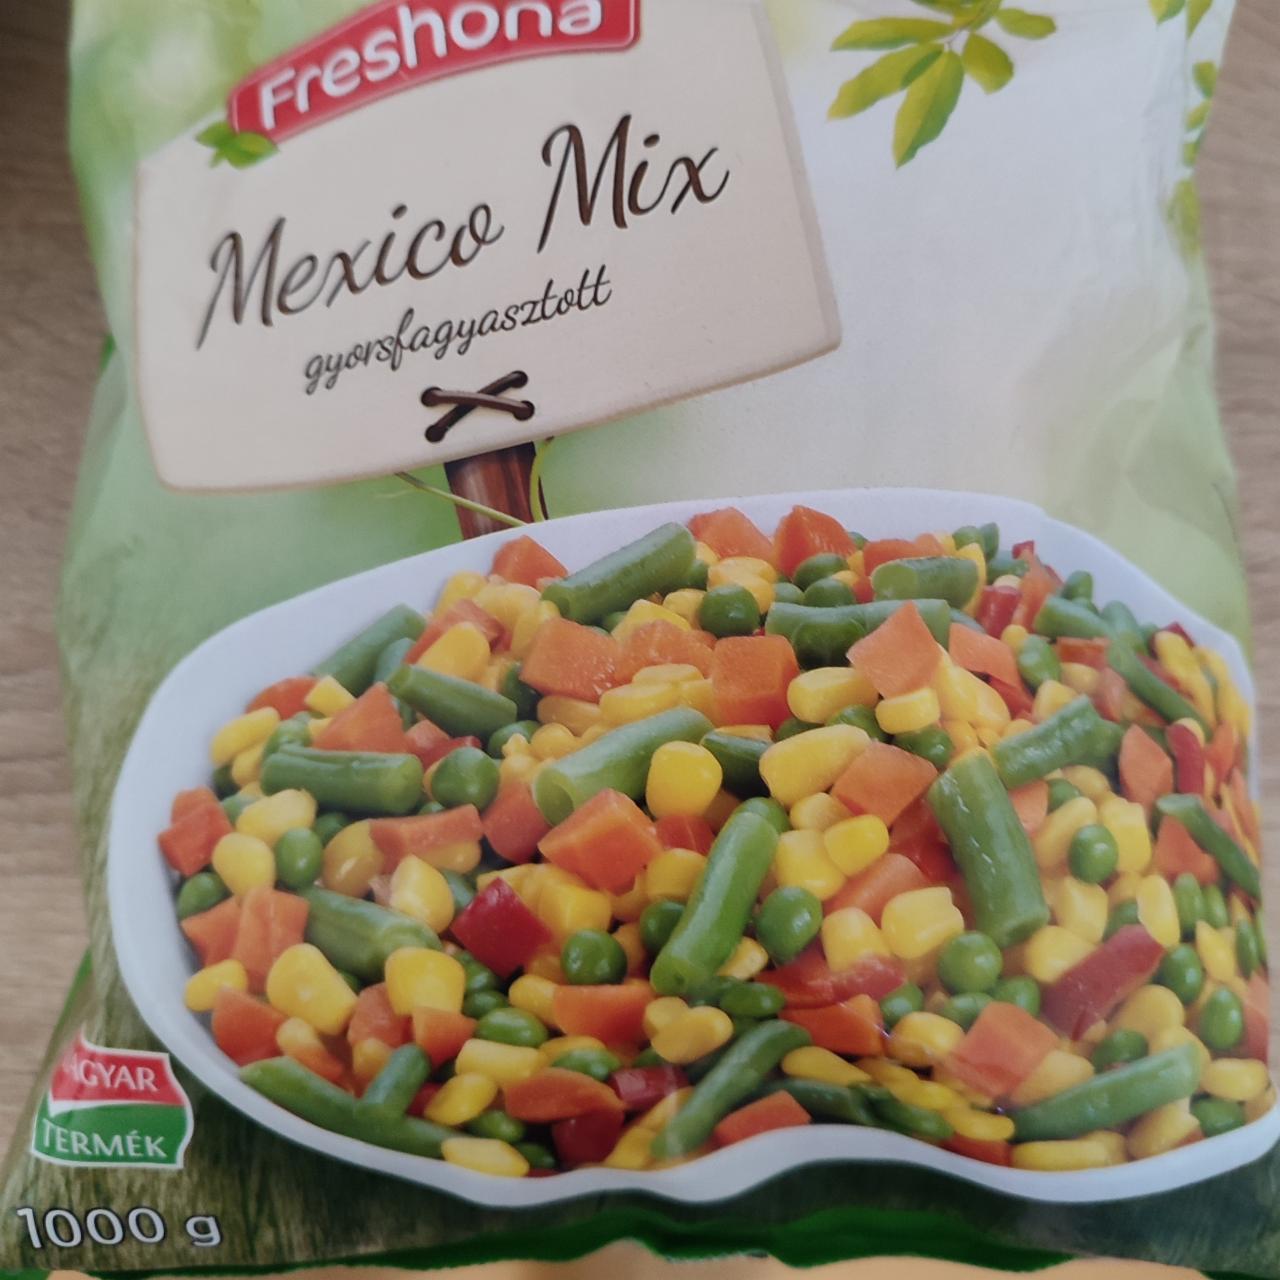 Фото - Овочі заморожені Mexico Mix Freshona